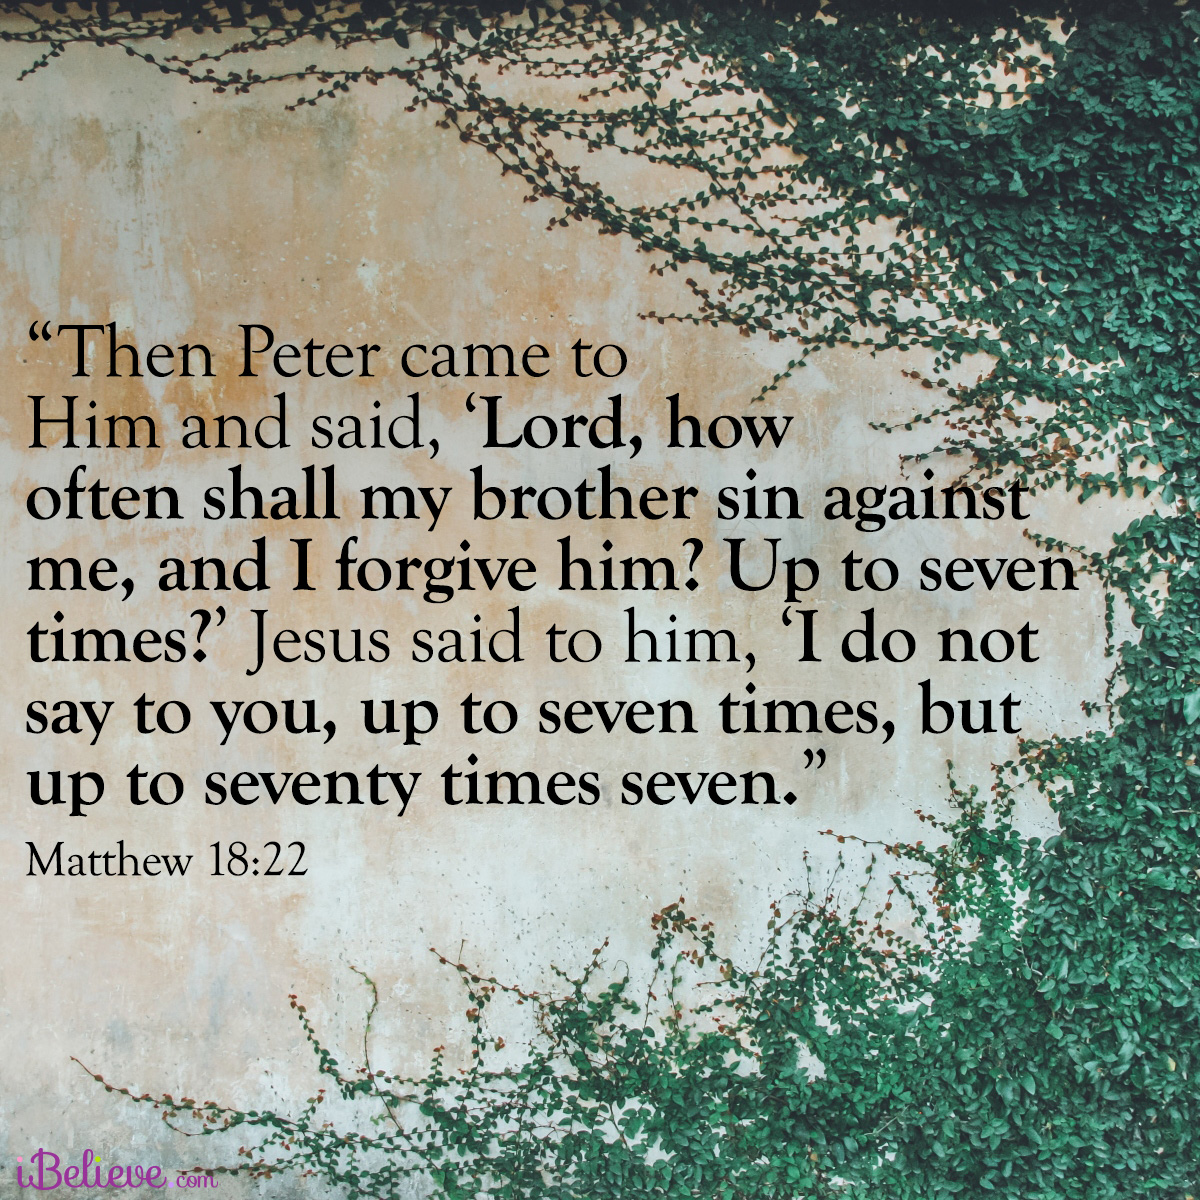 Matthew 18:22, inspirational image